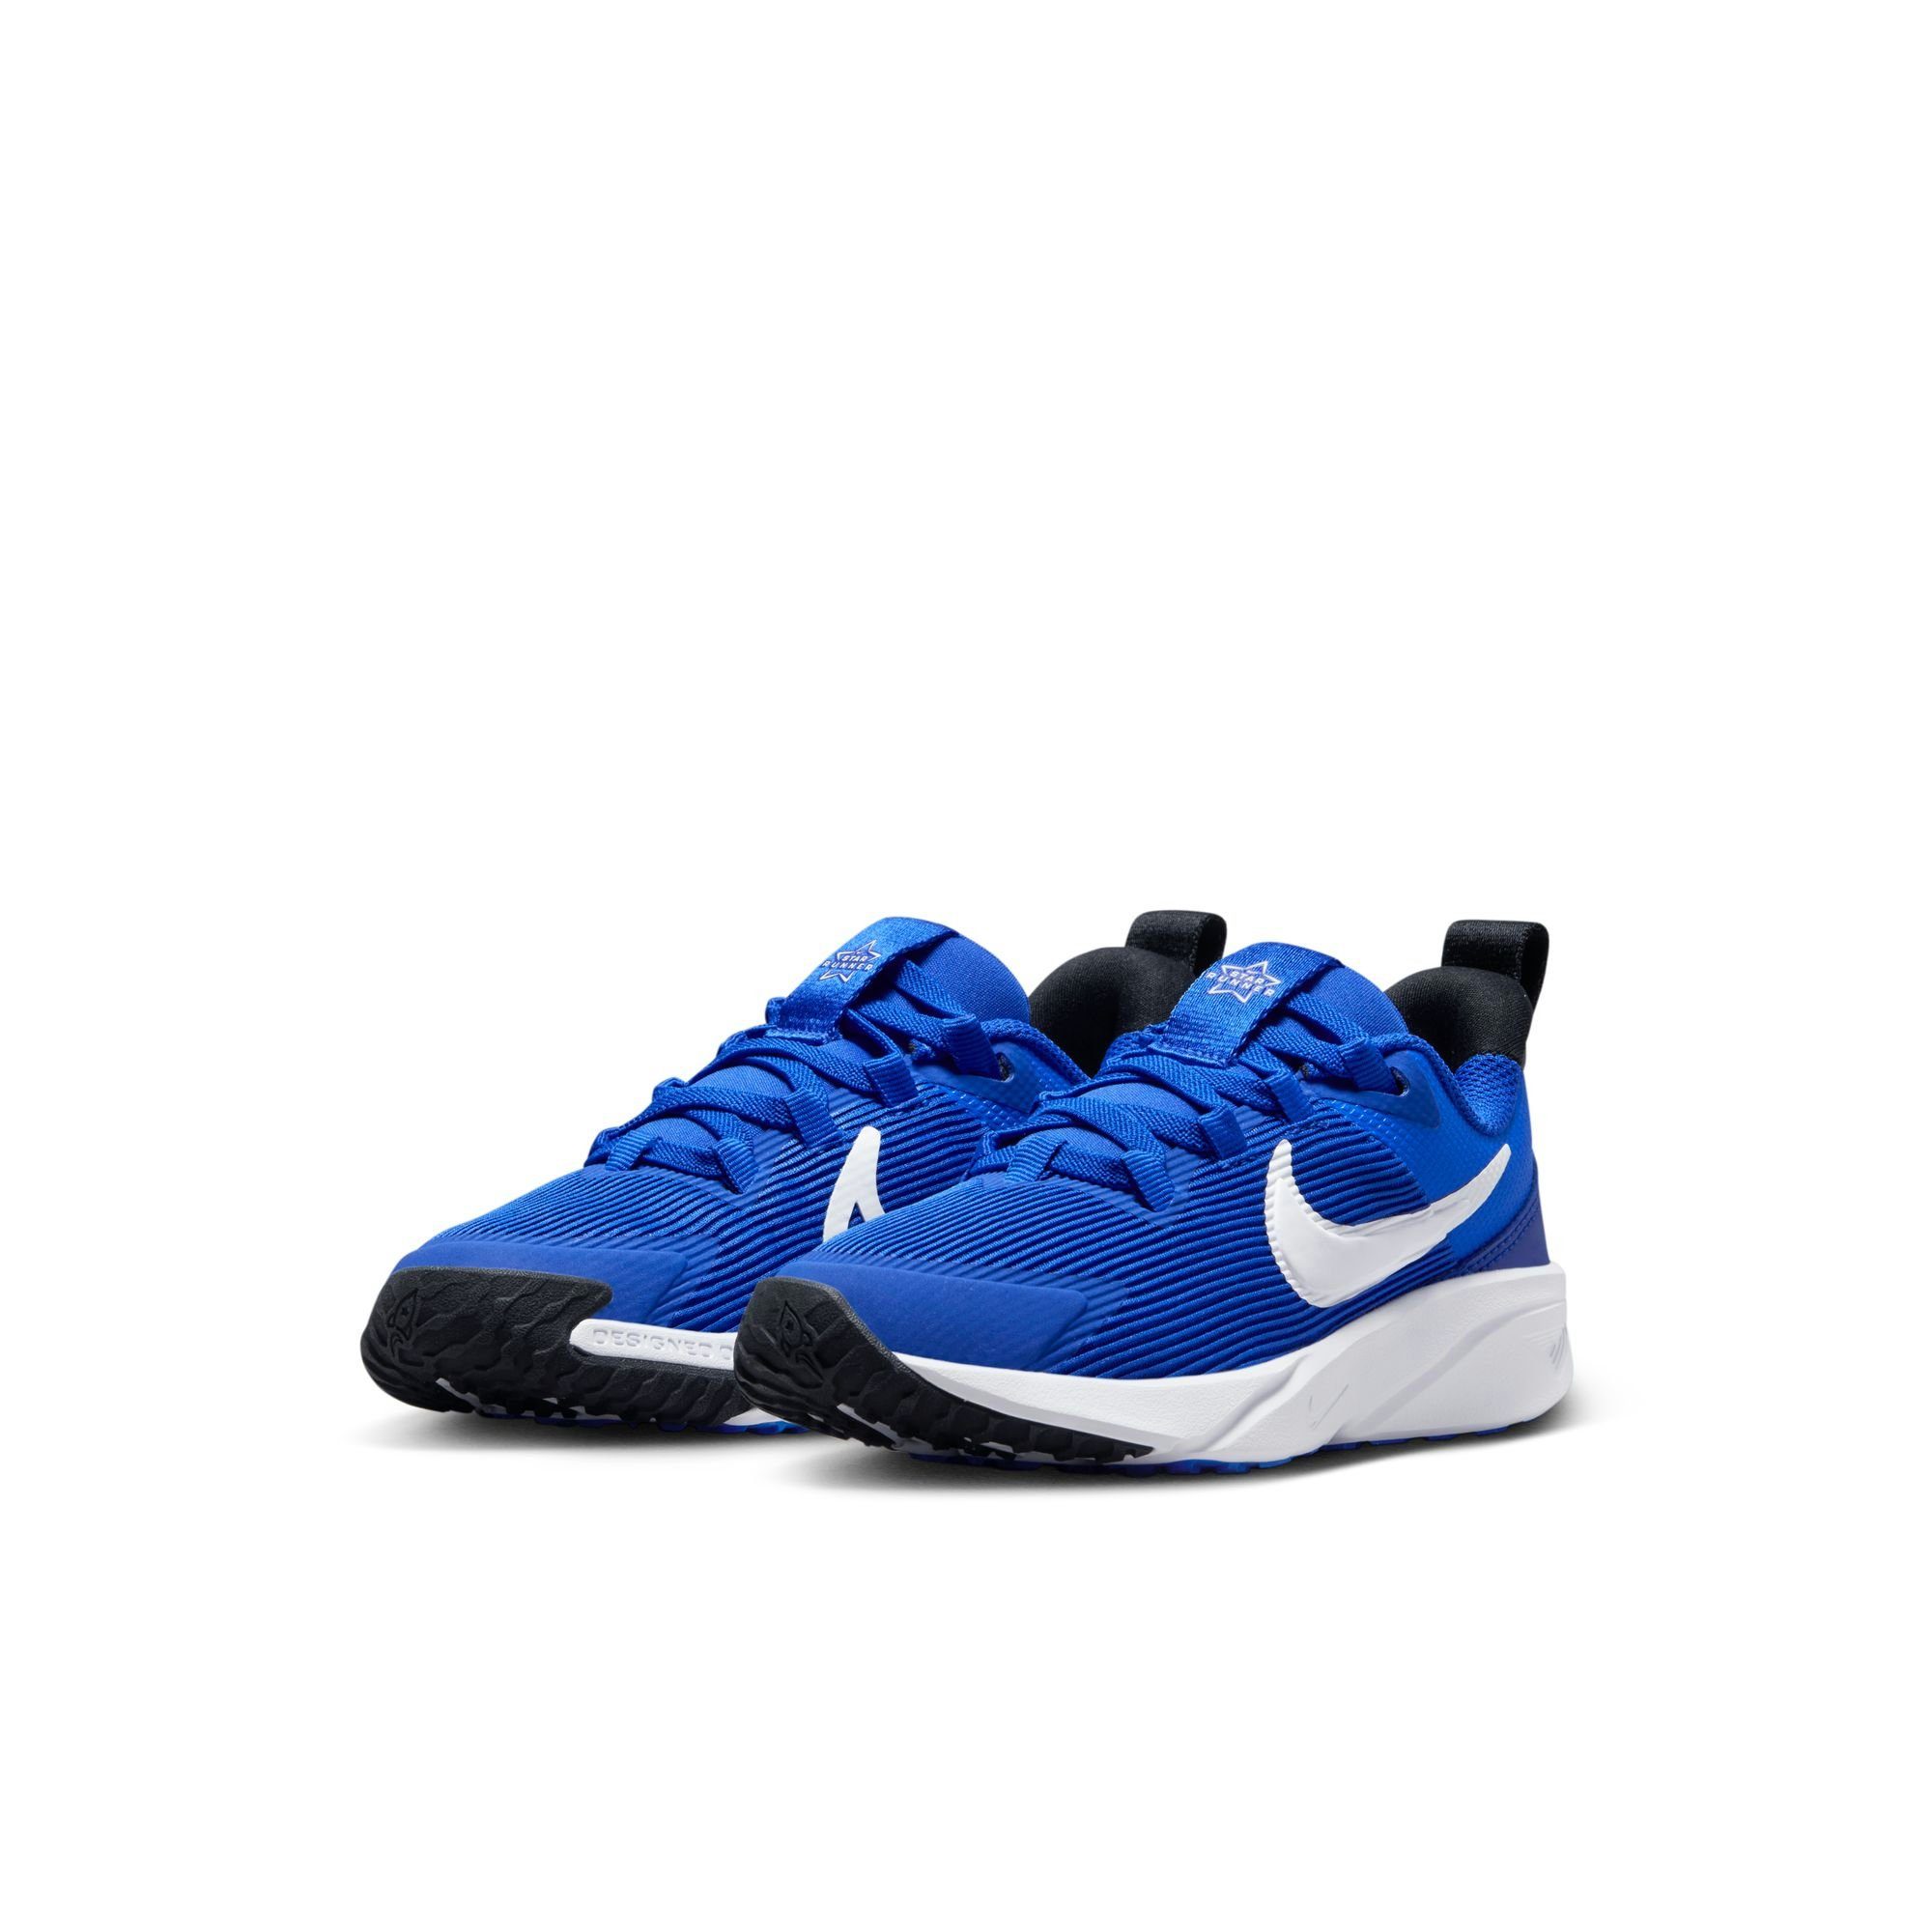 STAR 4 blau RUNNER (PS) Laufschuh Nike